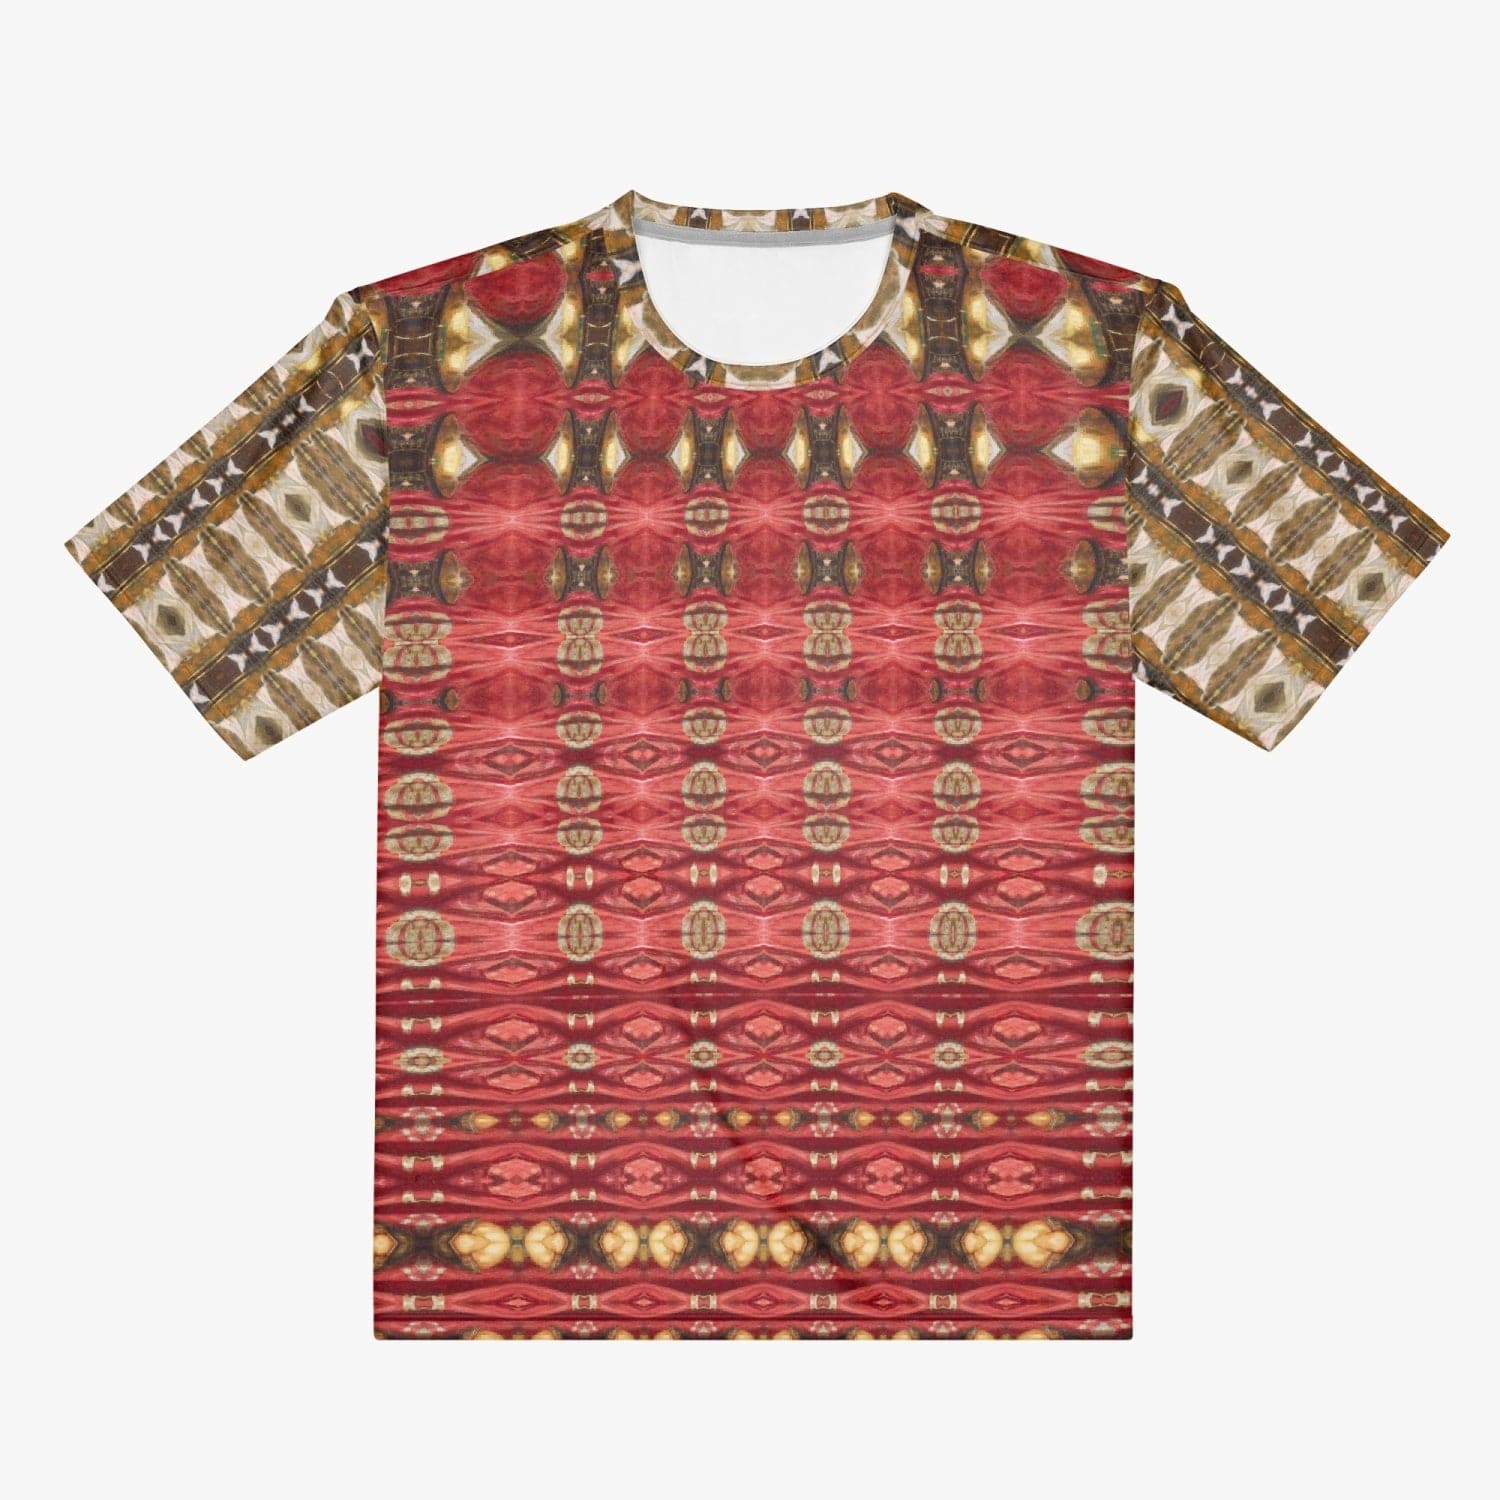 Red Patterned Handmade T-shirt for Men by Sensus Studio Design